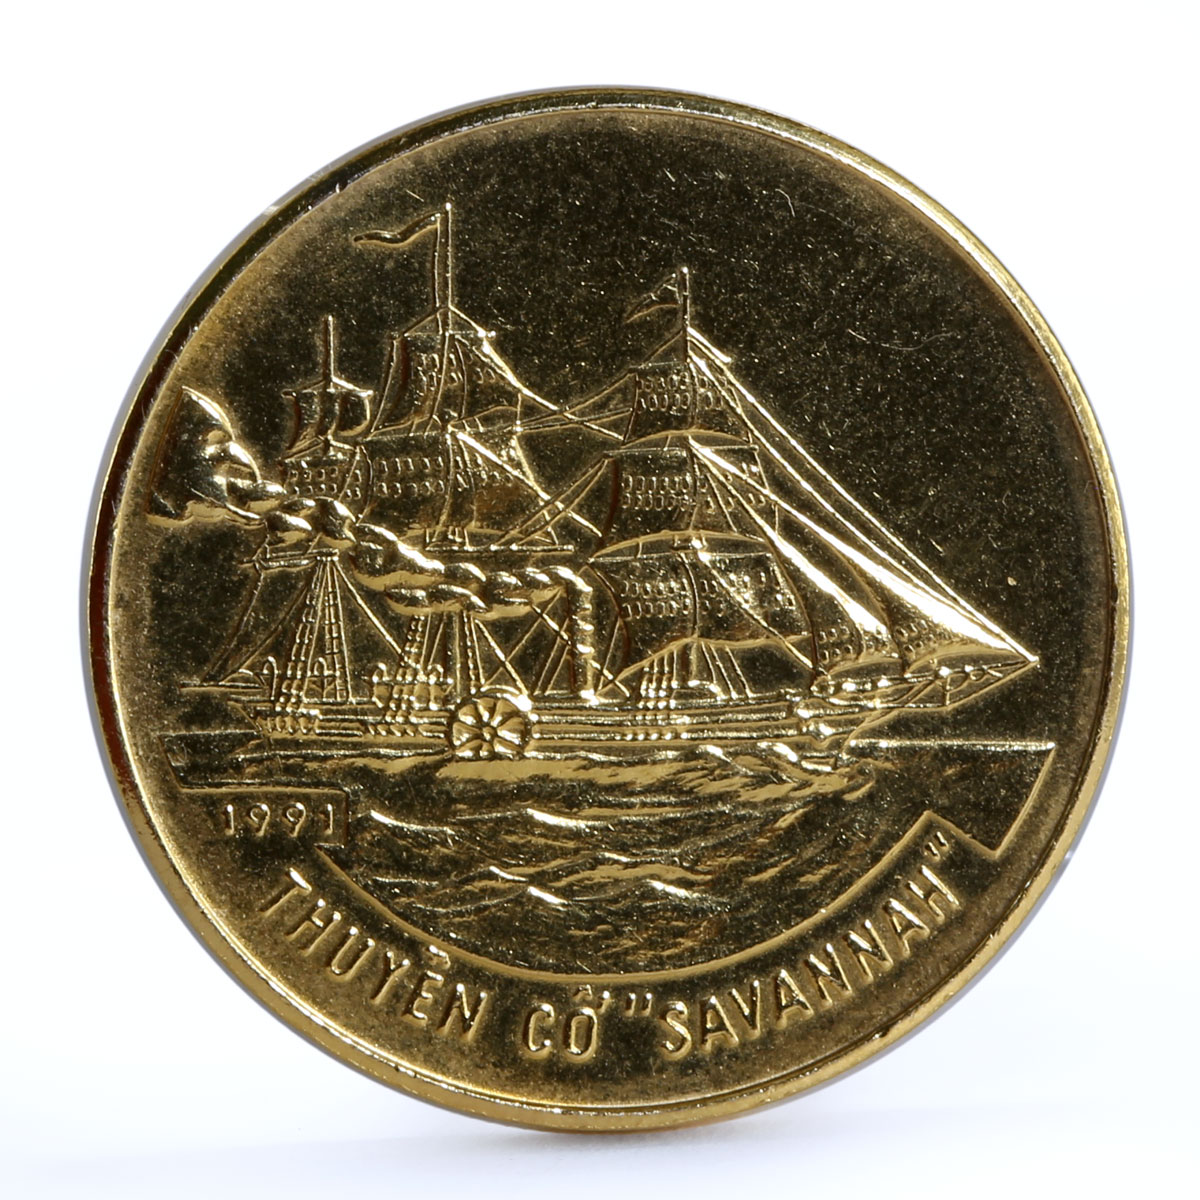 Vietnam 10 dong Boats of the World series Savannah Ship gilded CuNi coin 1991